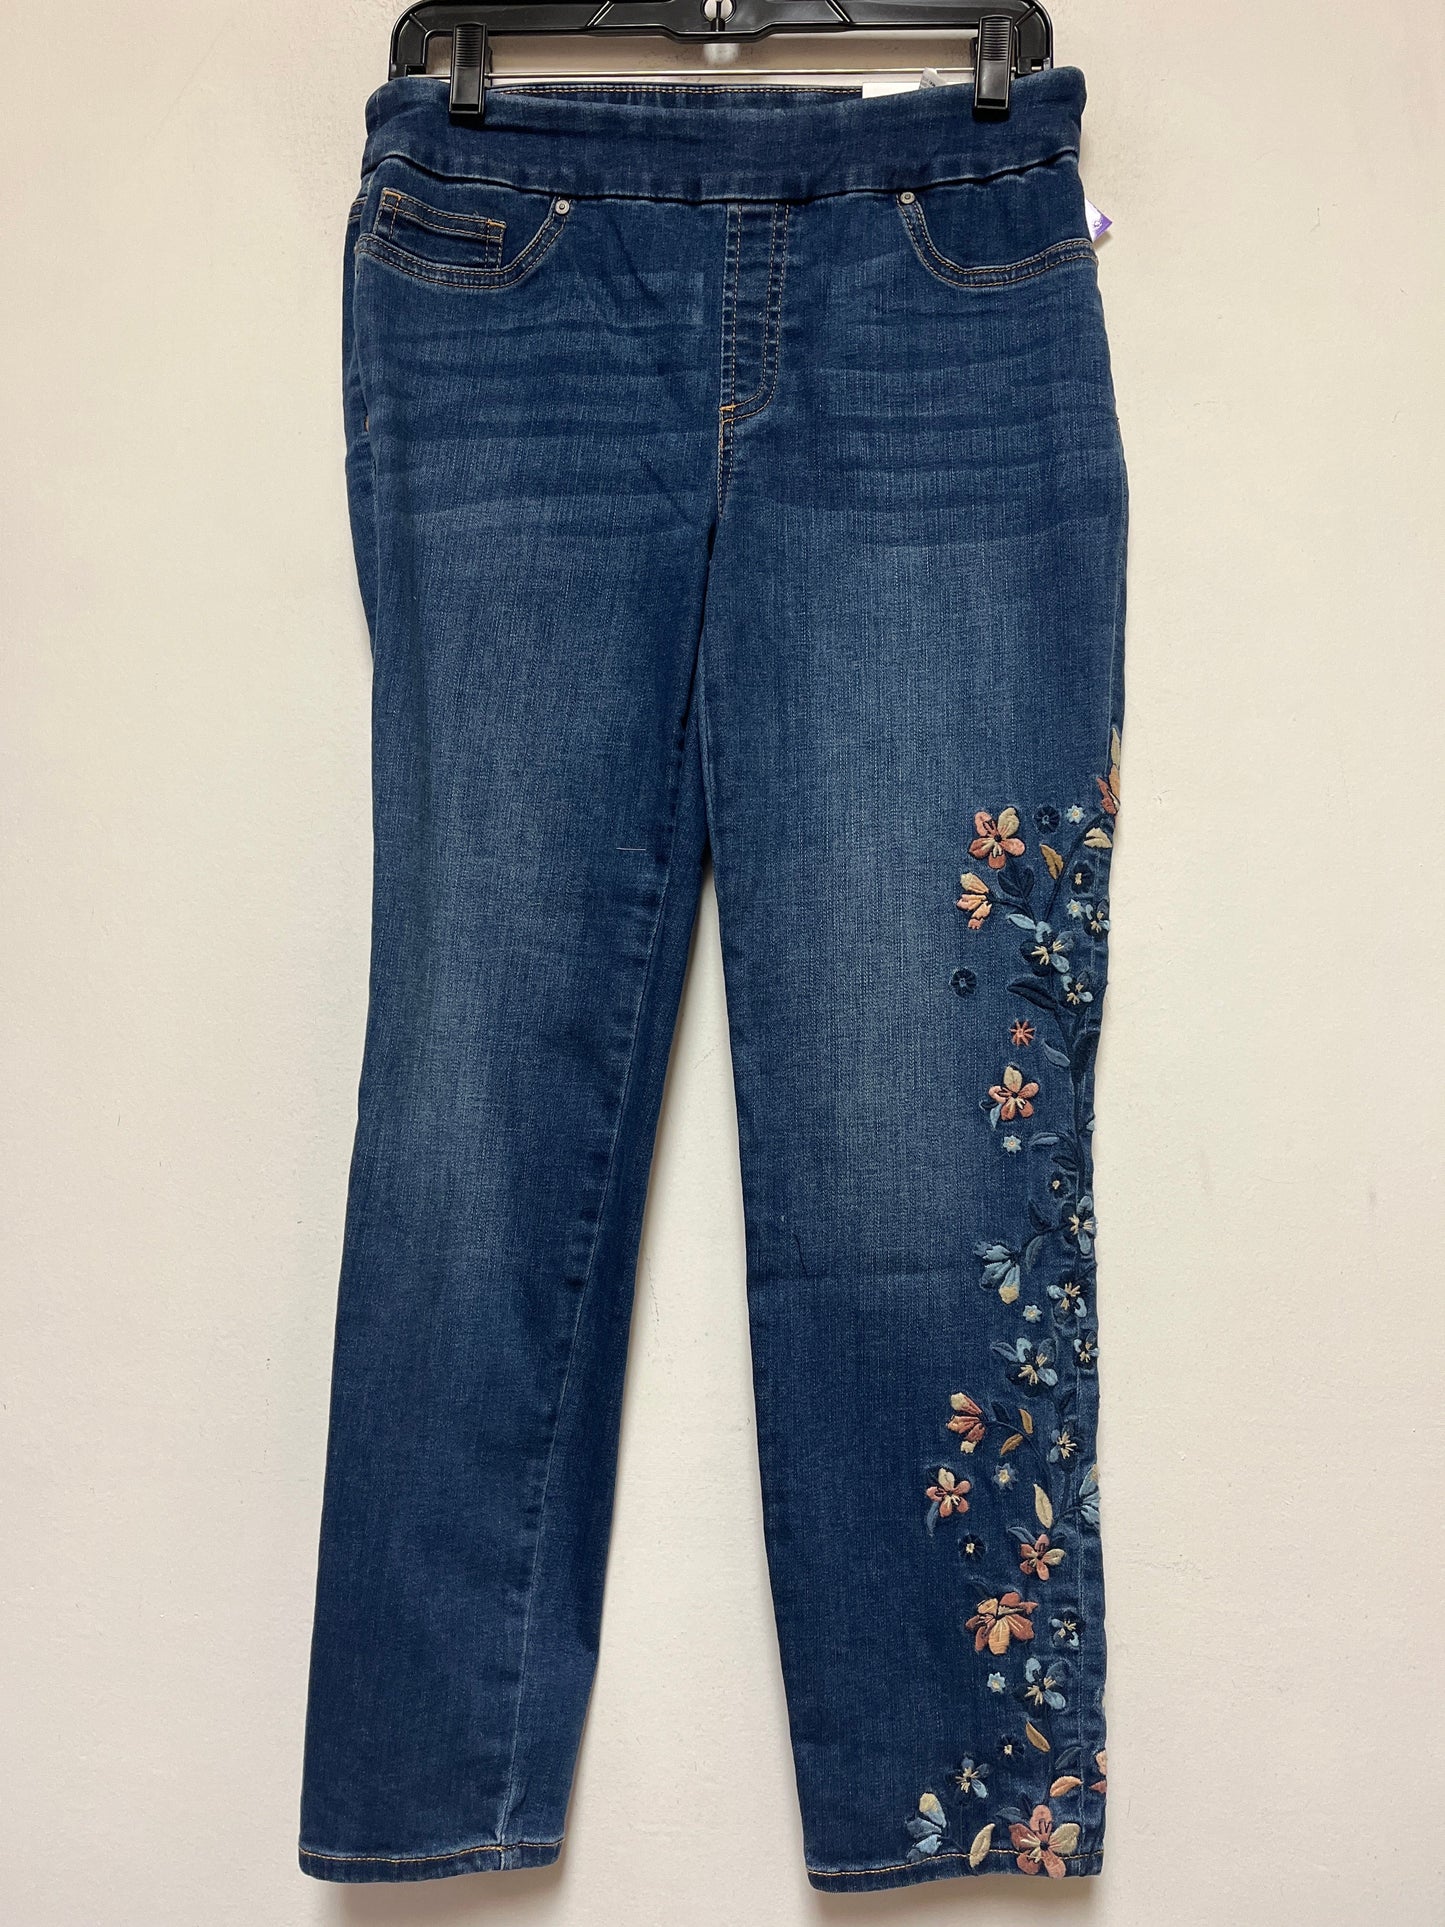 Blue Denim Jeans Jeggings Chicos, Size 4